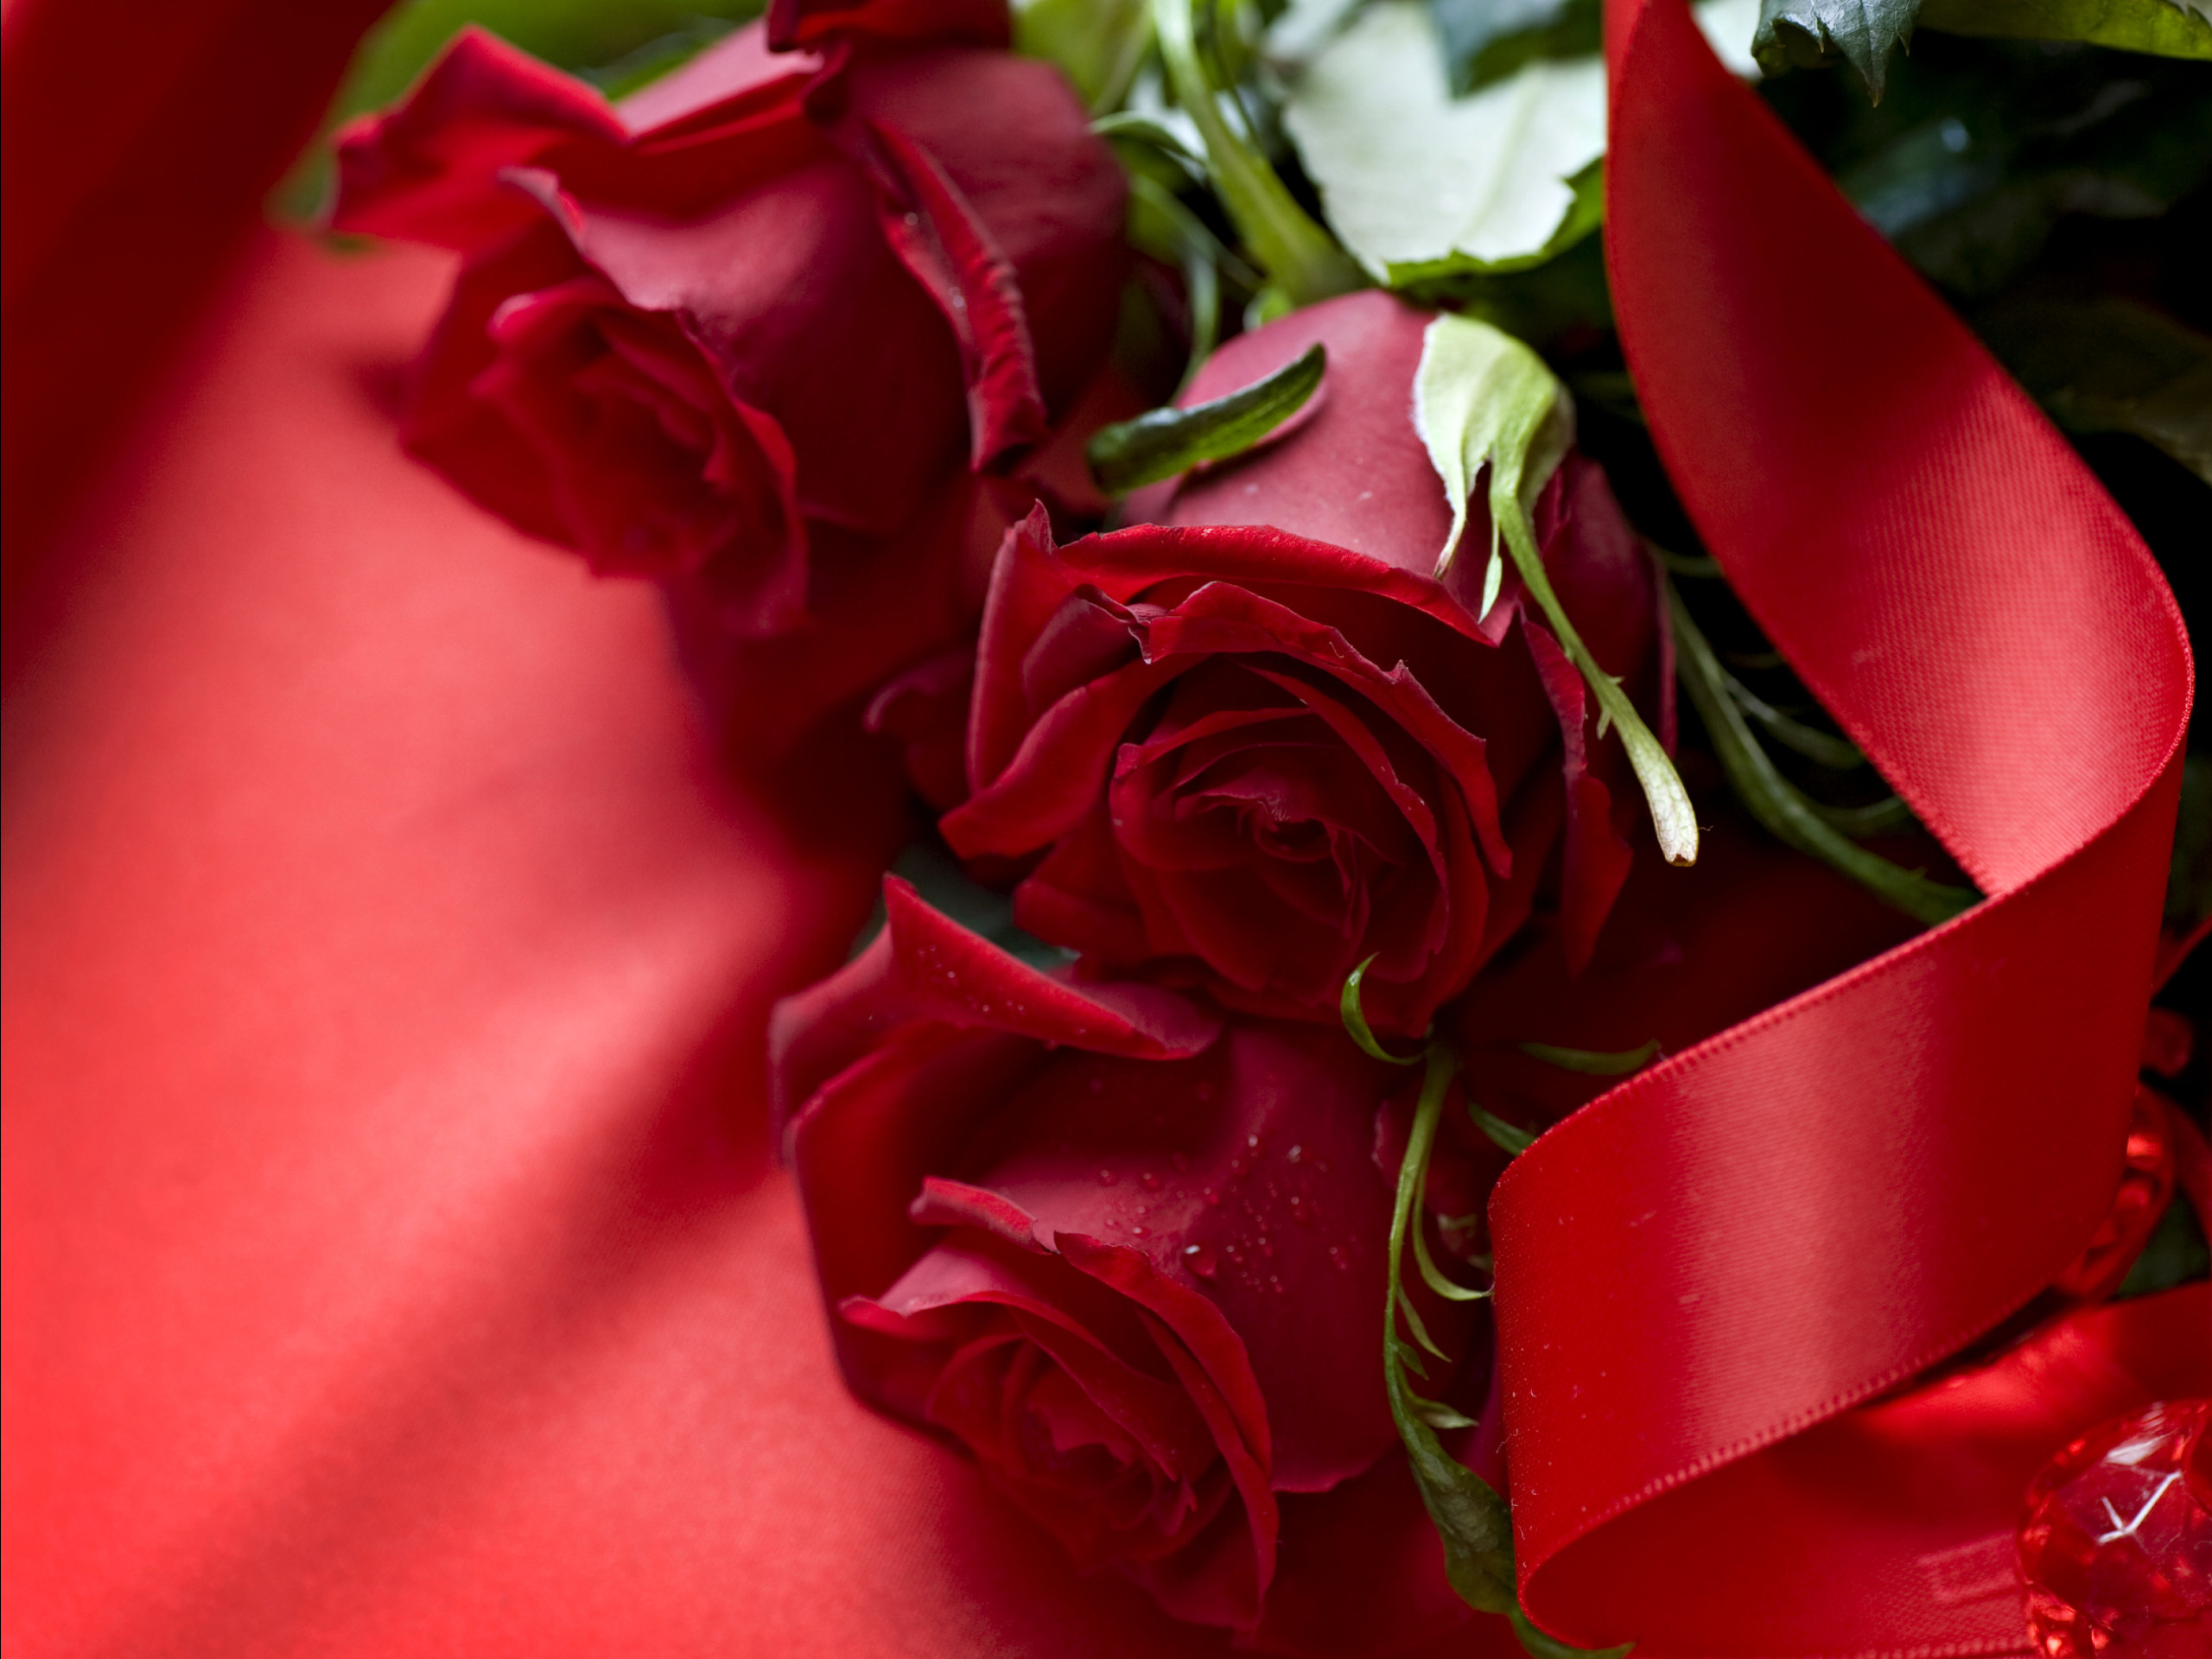 rose flower wallpaper hd free download,red,garden roses,rose,flower,petal